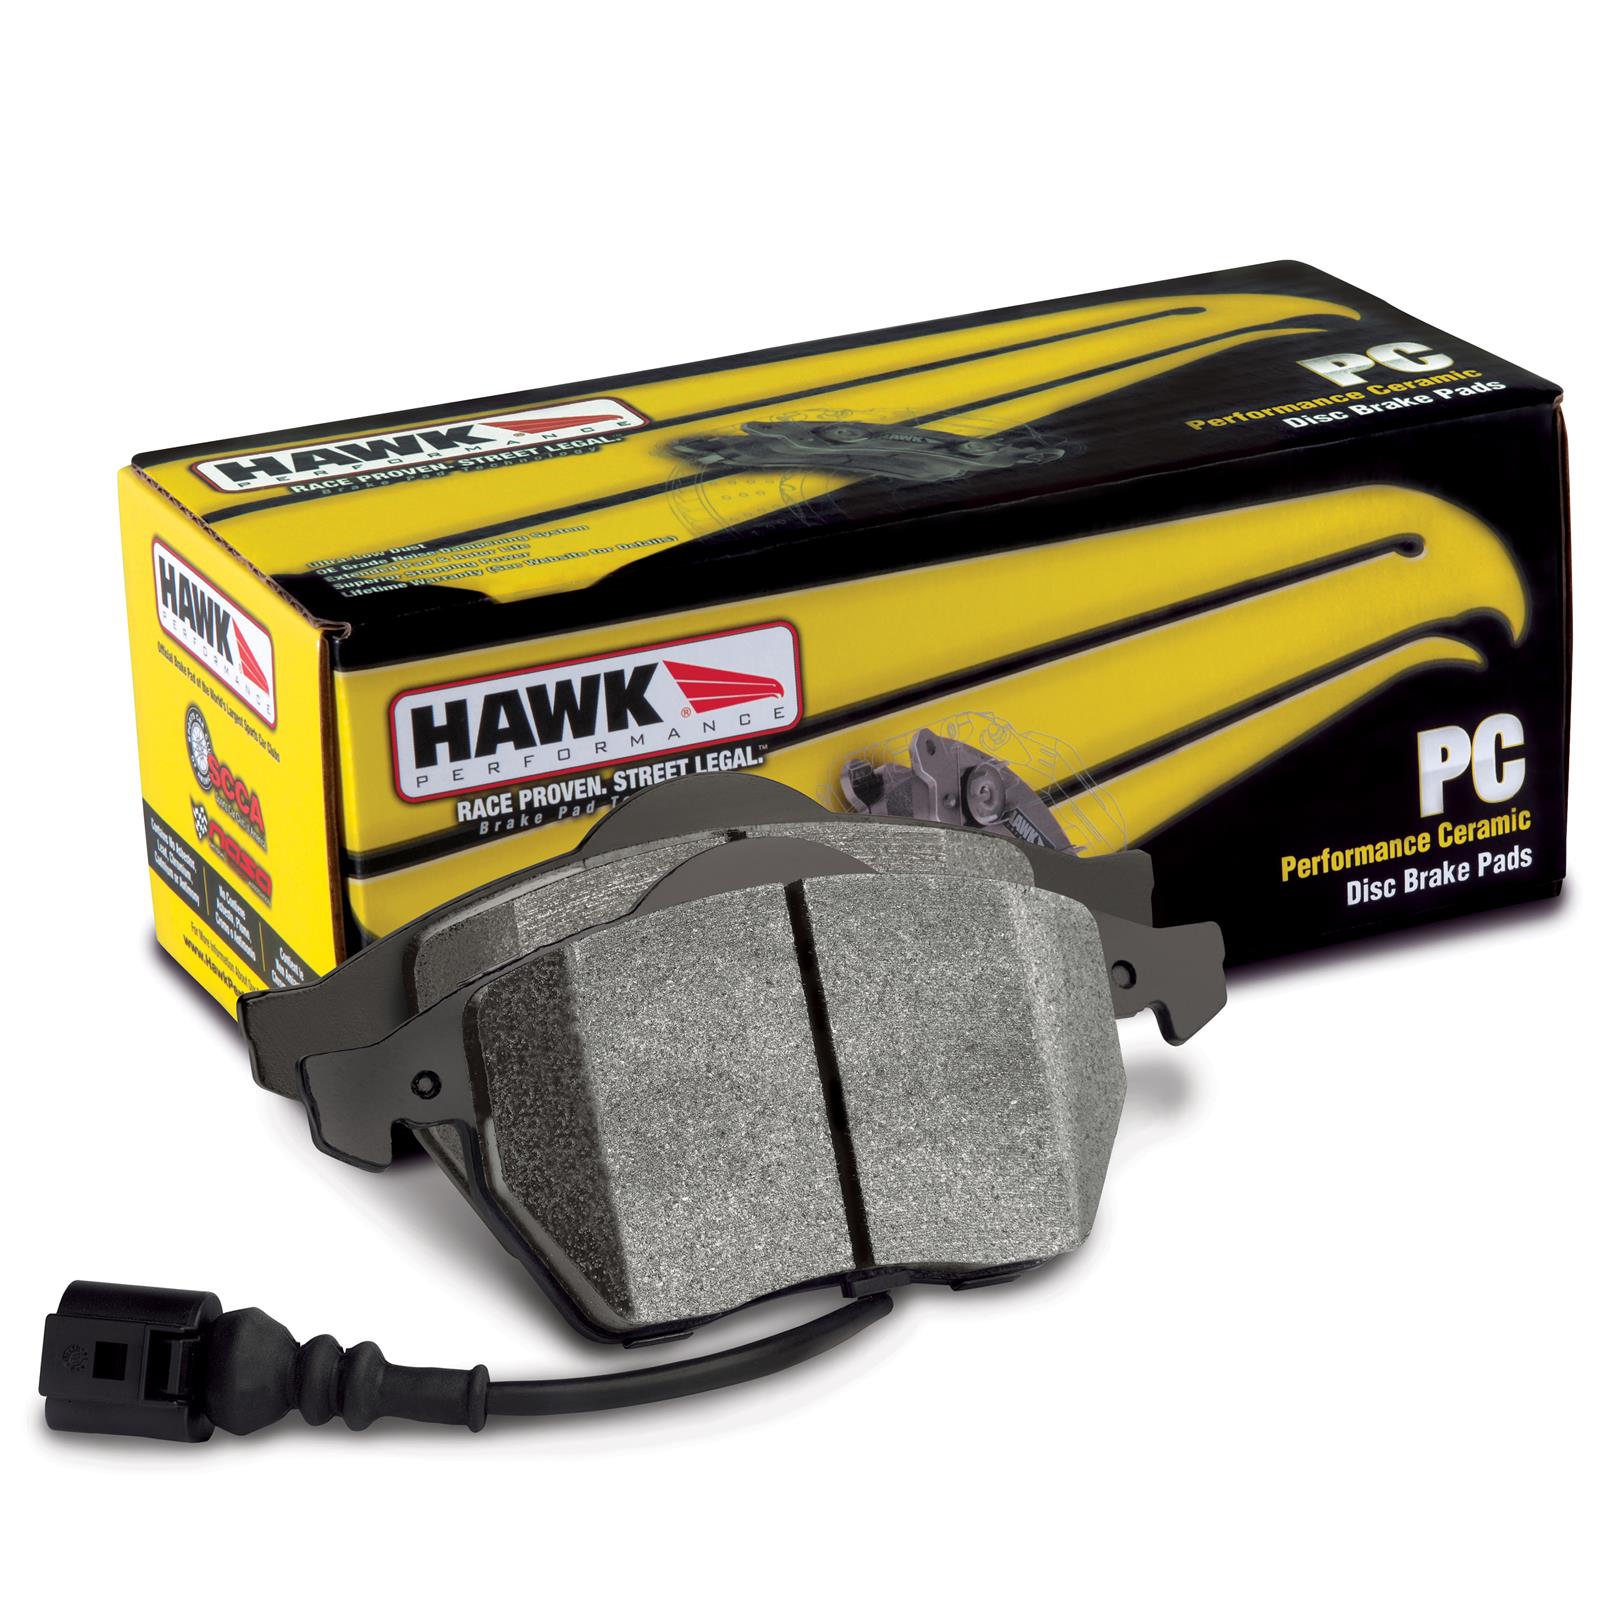 Hawk Performance HB561Z 710 Hawk Performance Ceramic Brake Pads